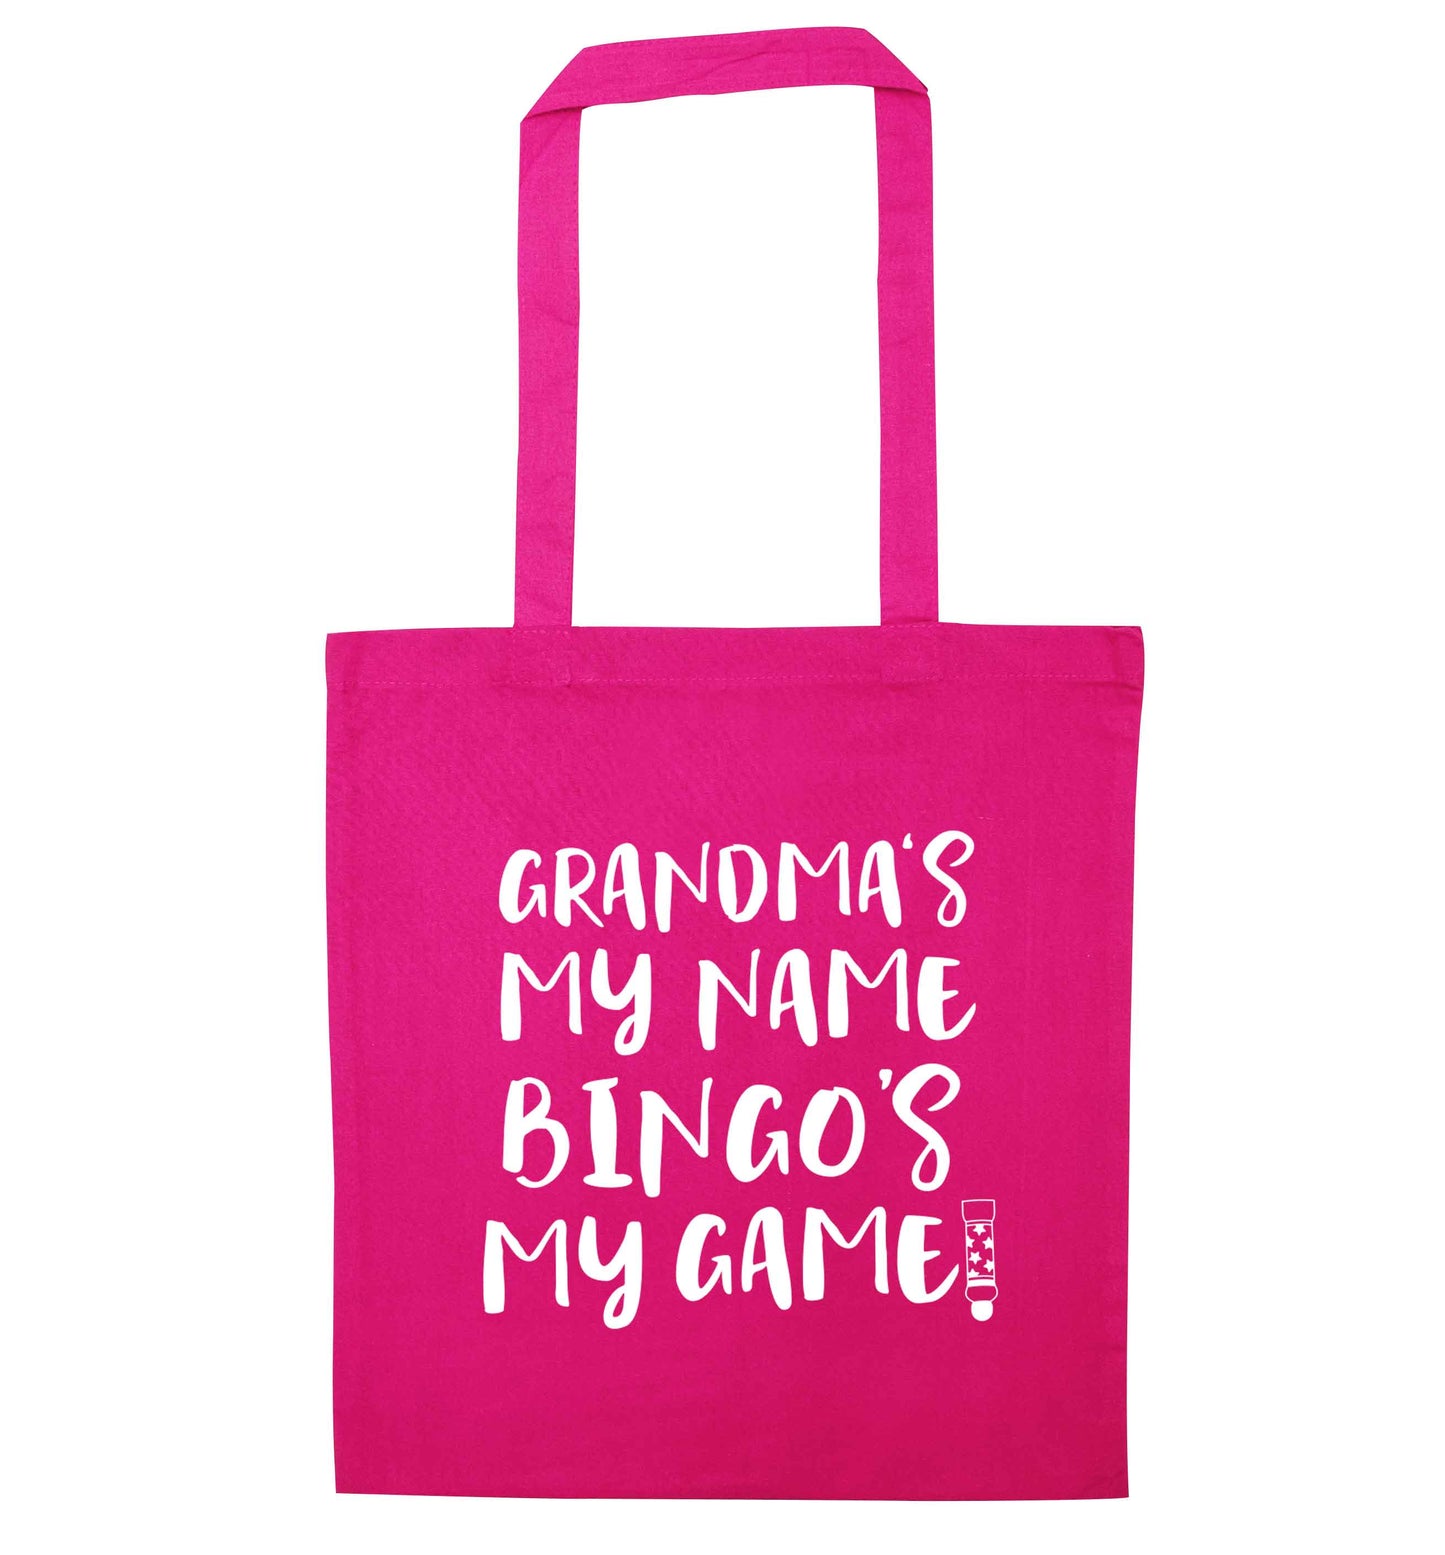 Grandma's my name bingo's my game! pink tote bag